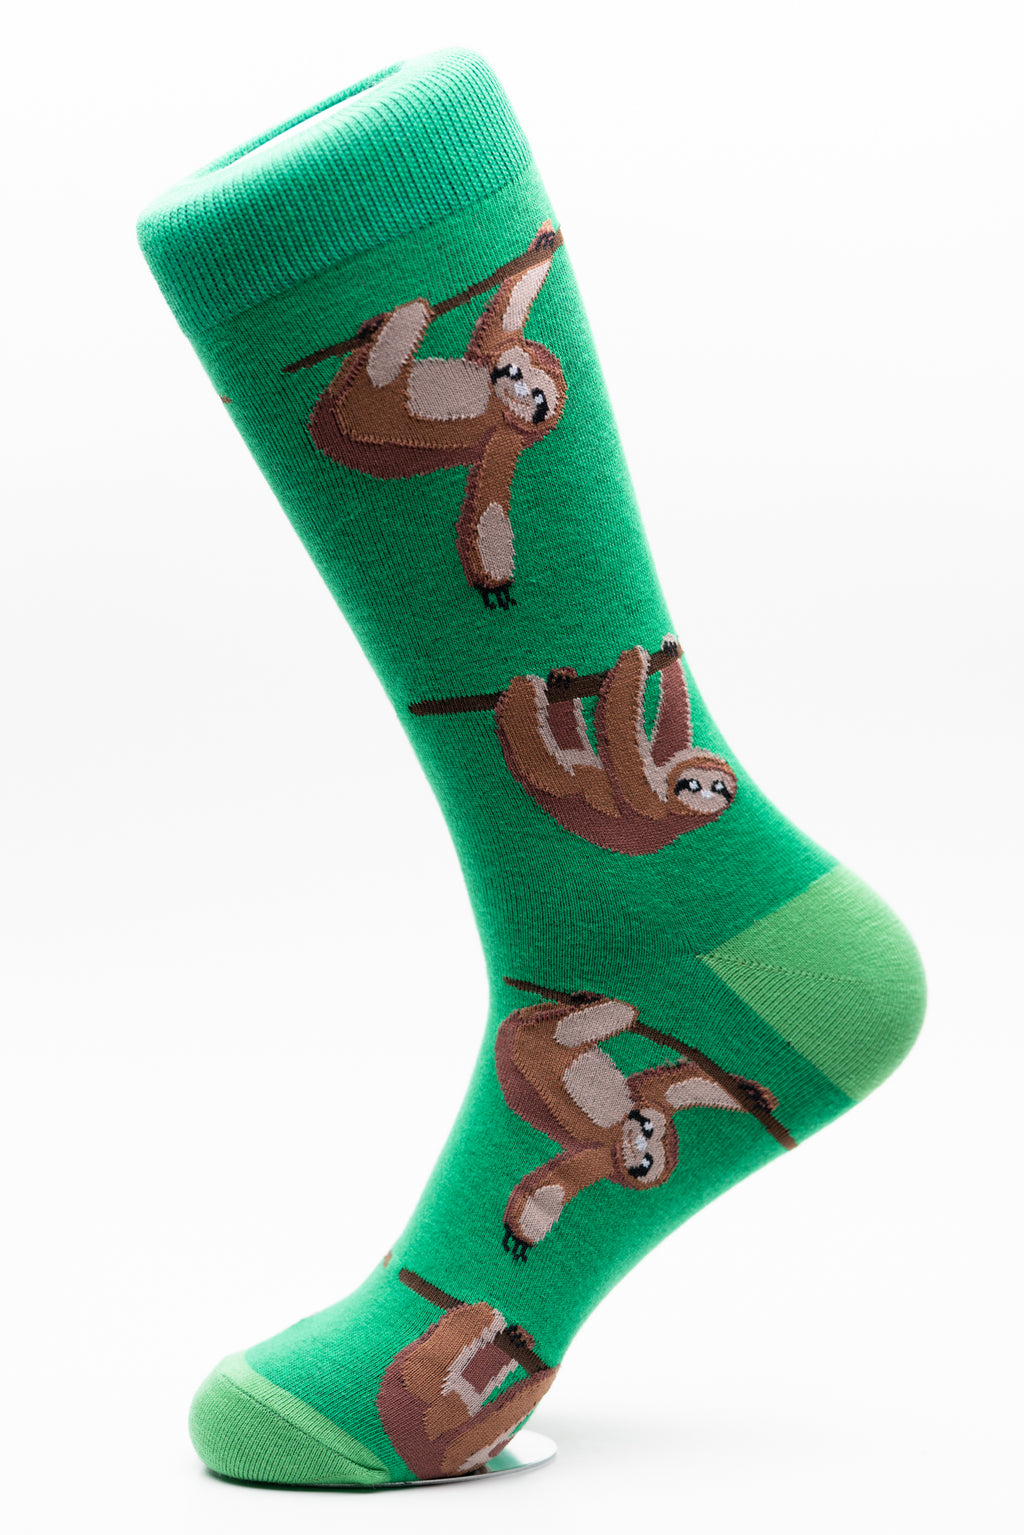 Sloth funky crew socks